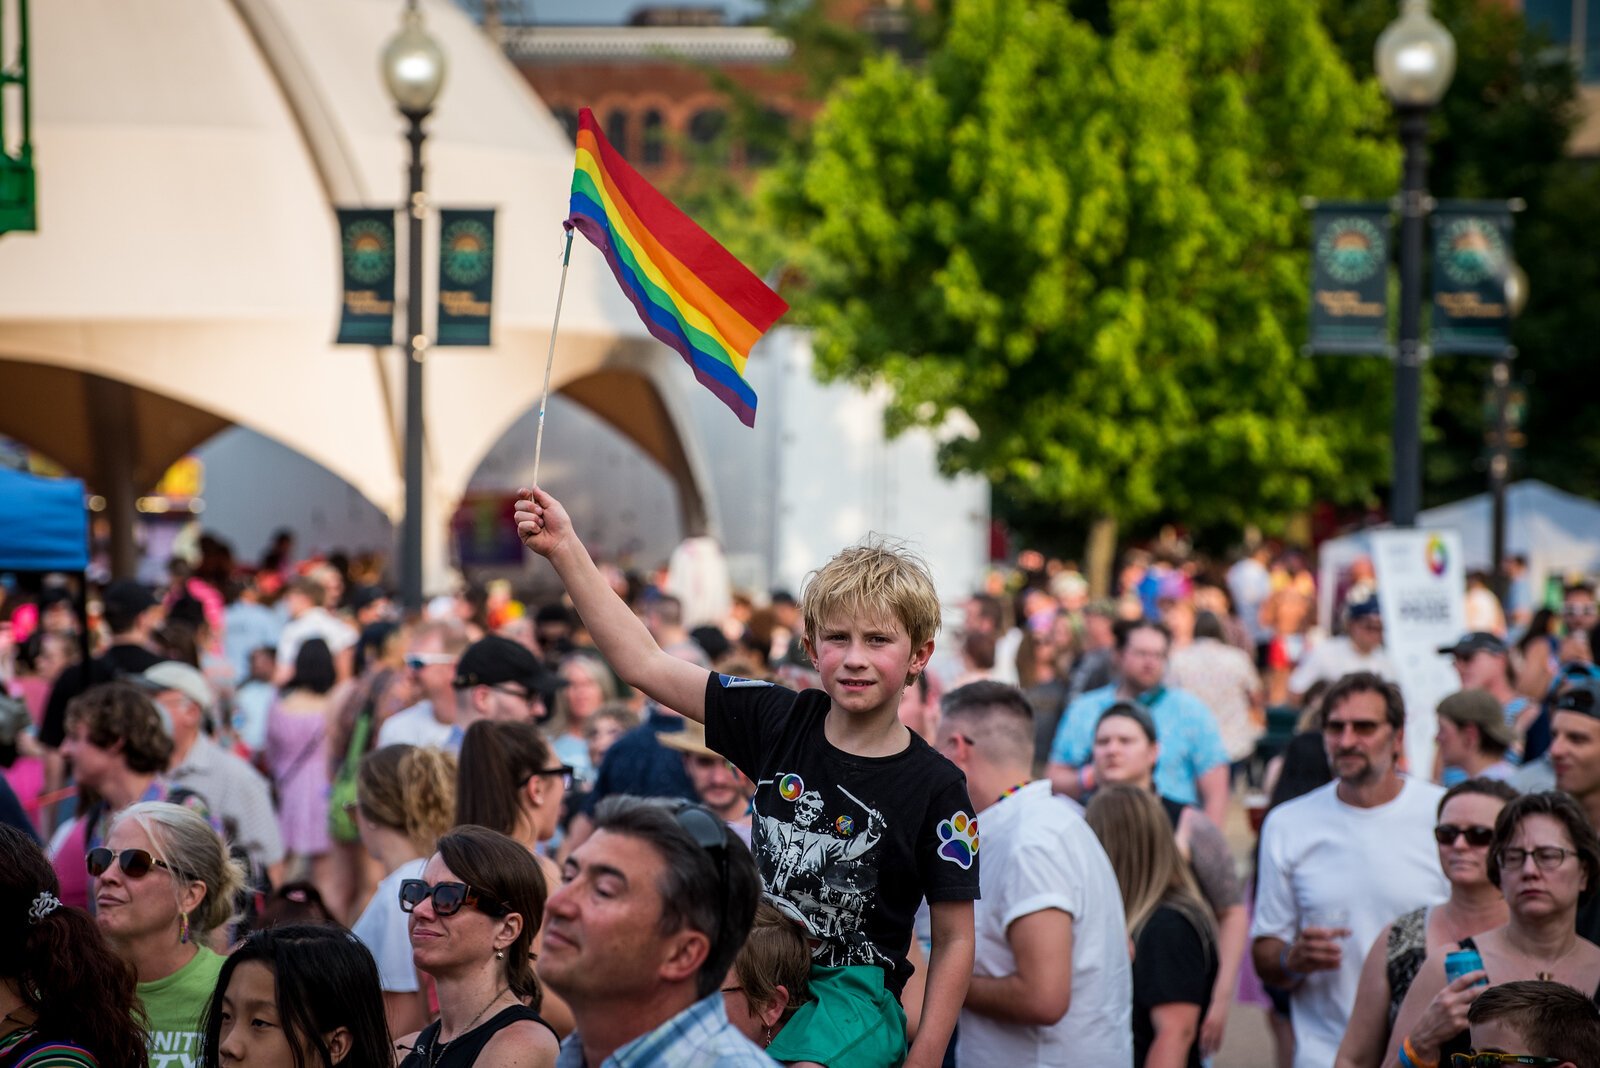 Kalamazoo Pride 2023 drew hundreds to celebrate at Arcadia Festival Site.